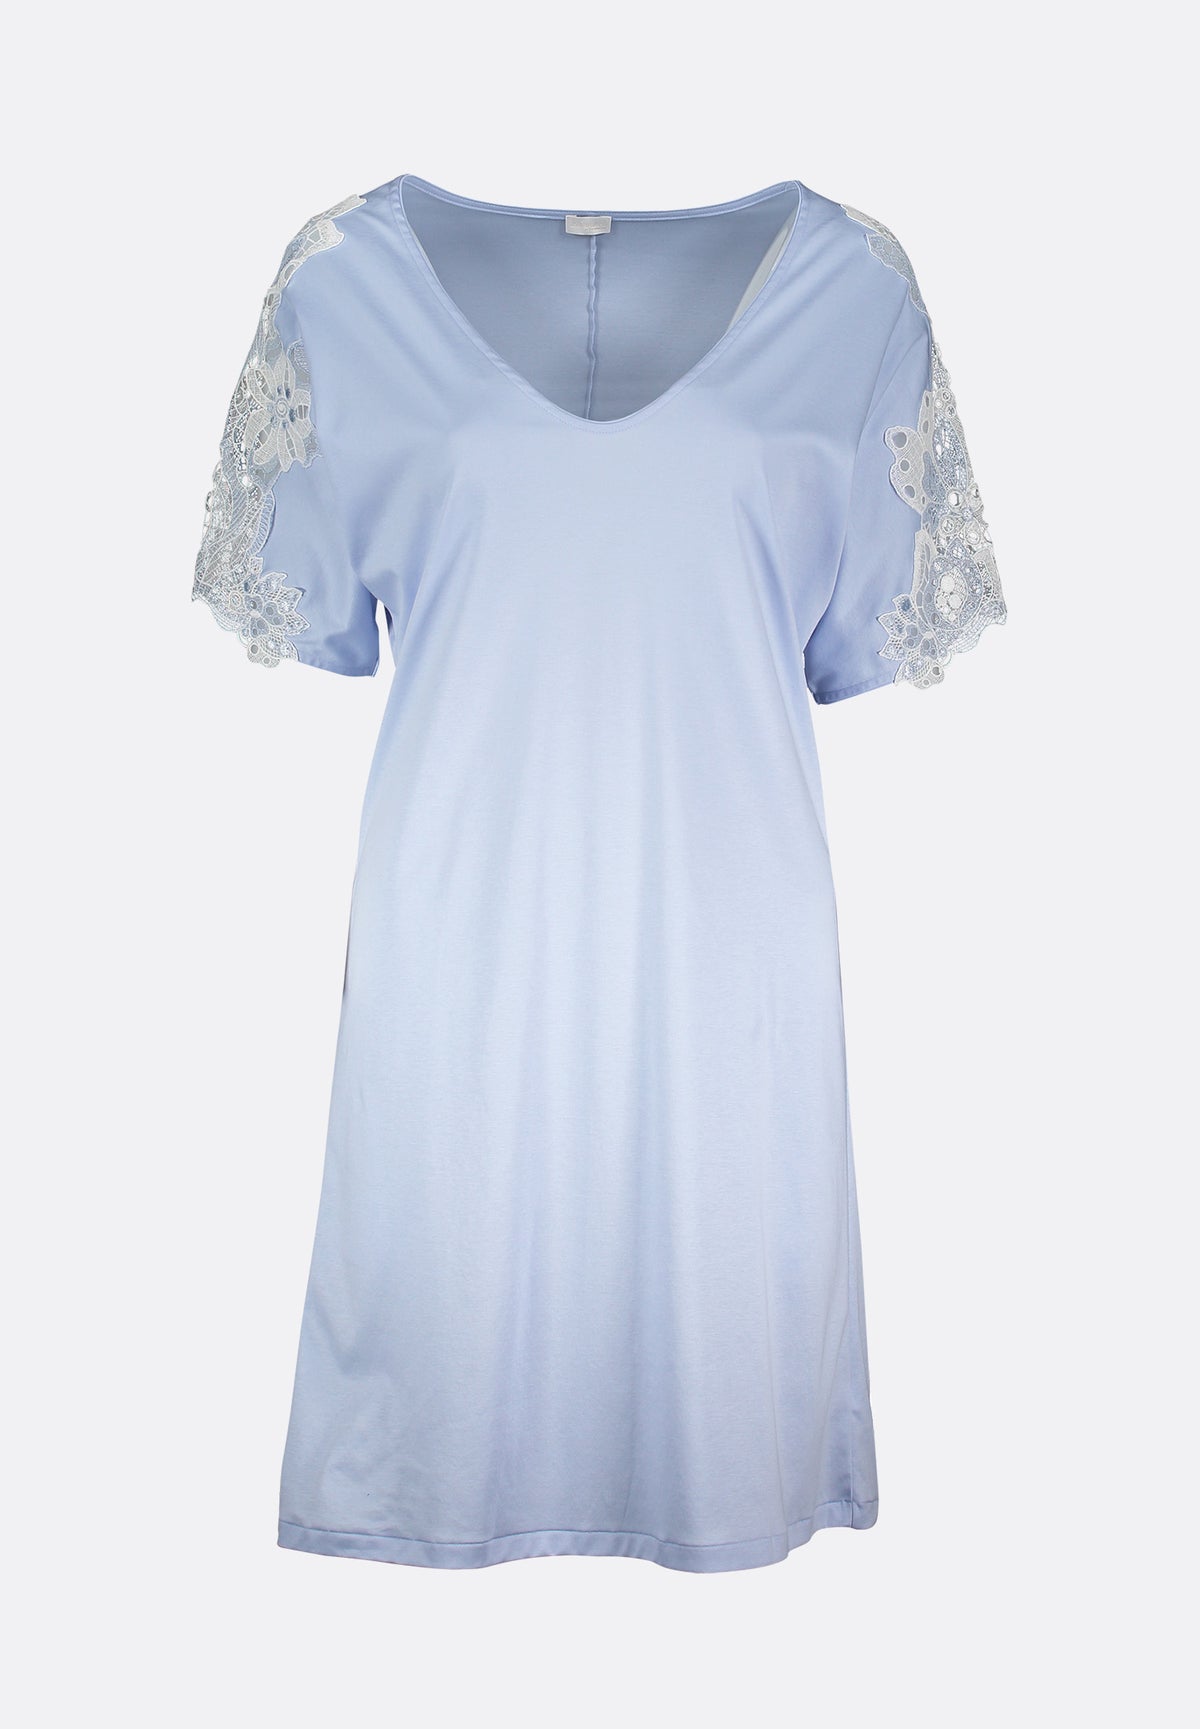 Sea Island | Tee-shirt de nuit manches courtes - light blue